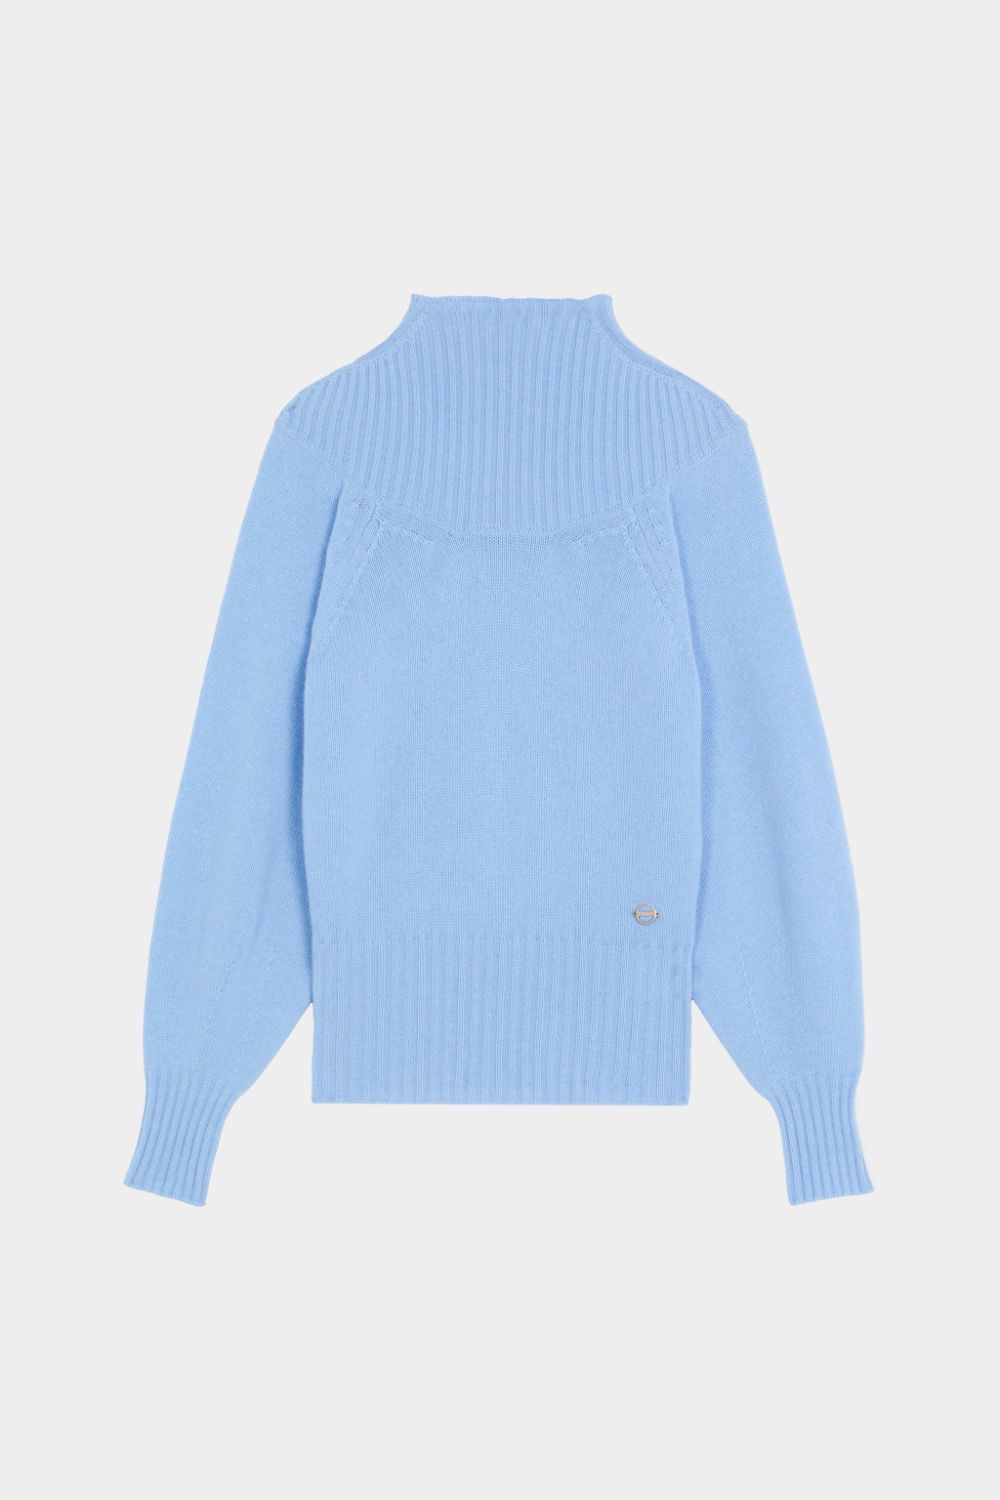 light blue turtleneck sweater